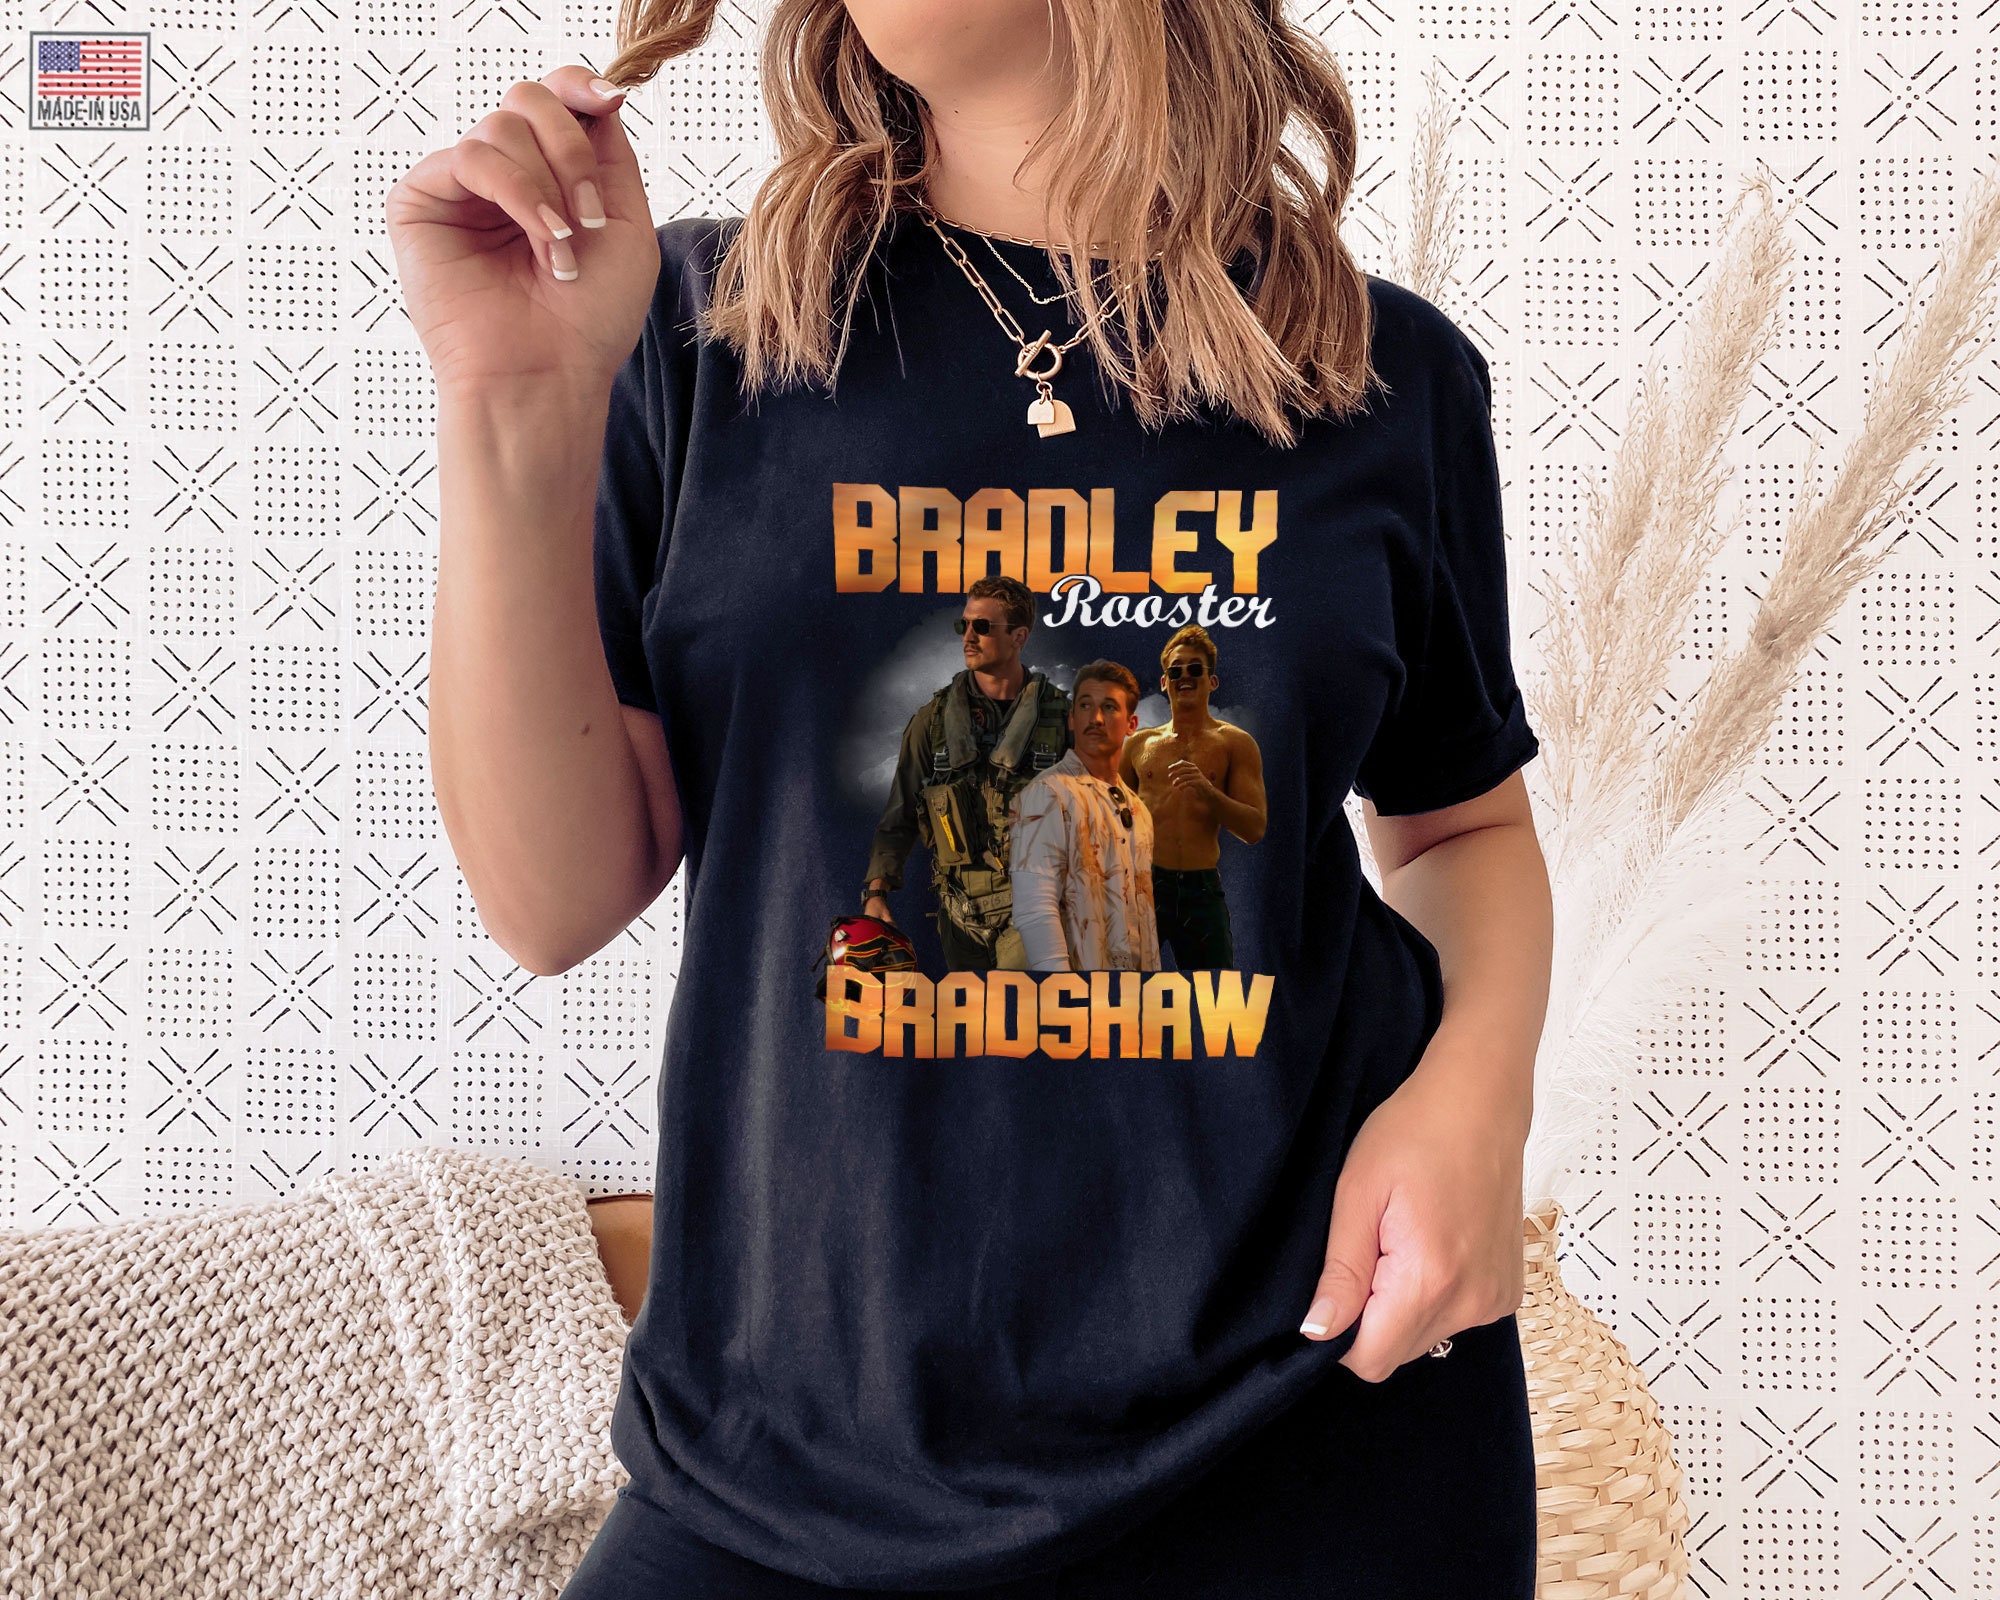 Top Gun Movie Character Bradley Rooster Bradshaw Maverick Miles Teller Unisex T-Shirt